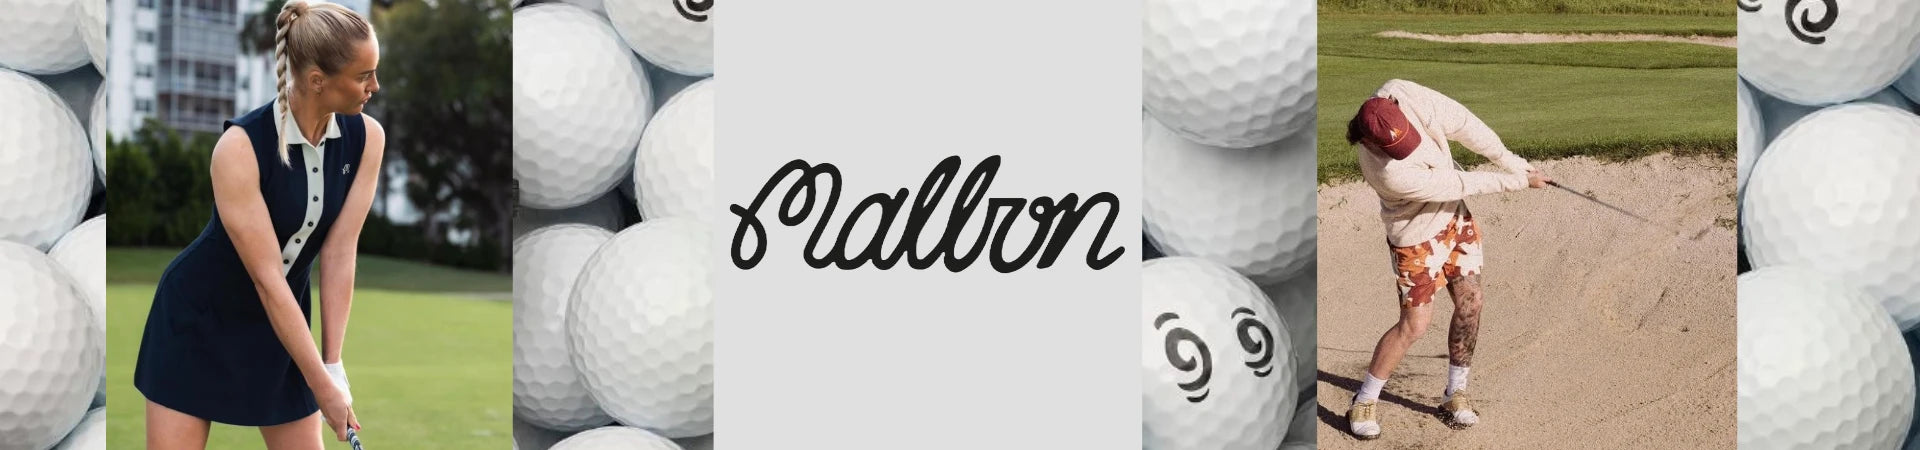 Shop Malbon Golf Apparel